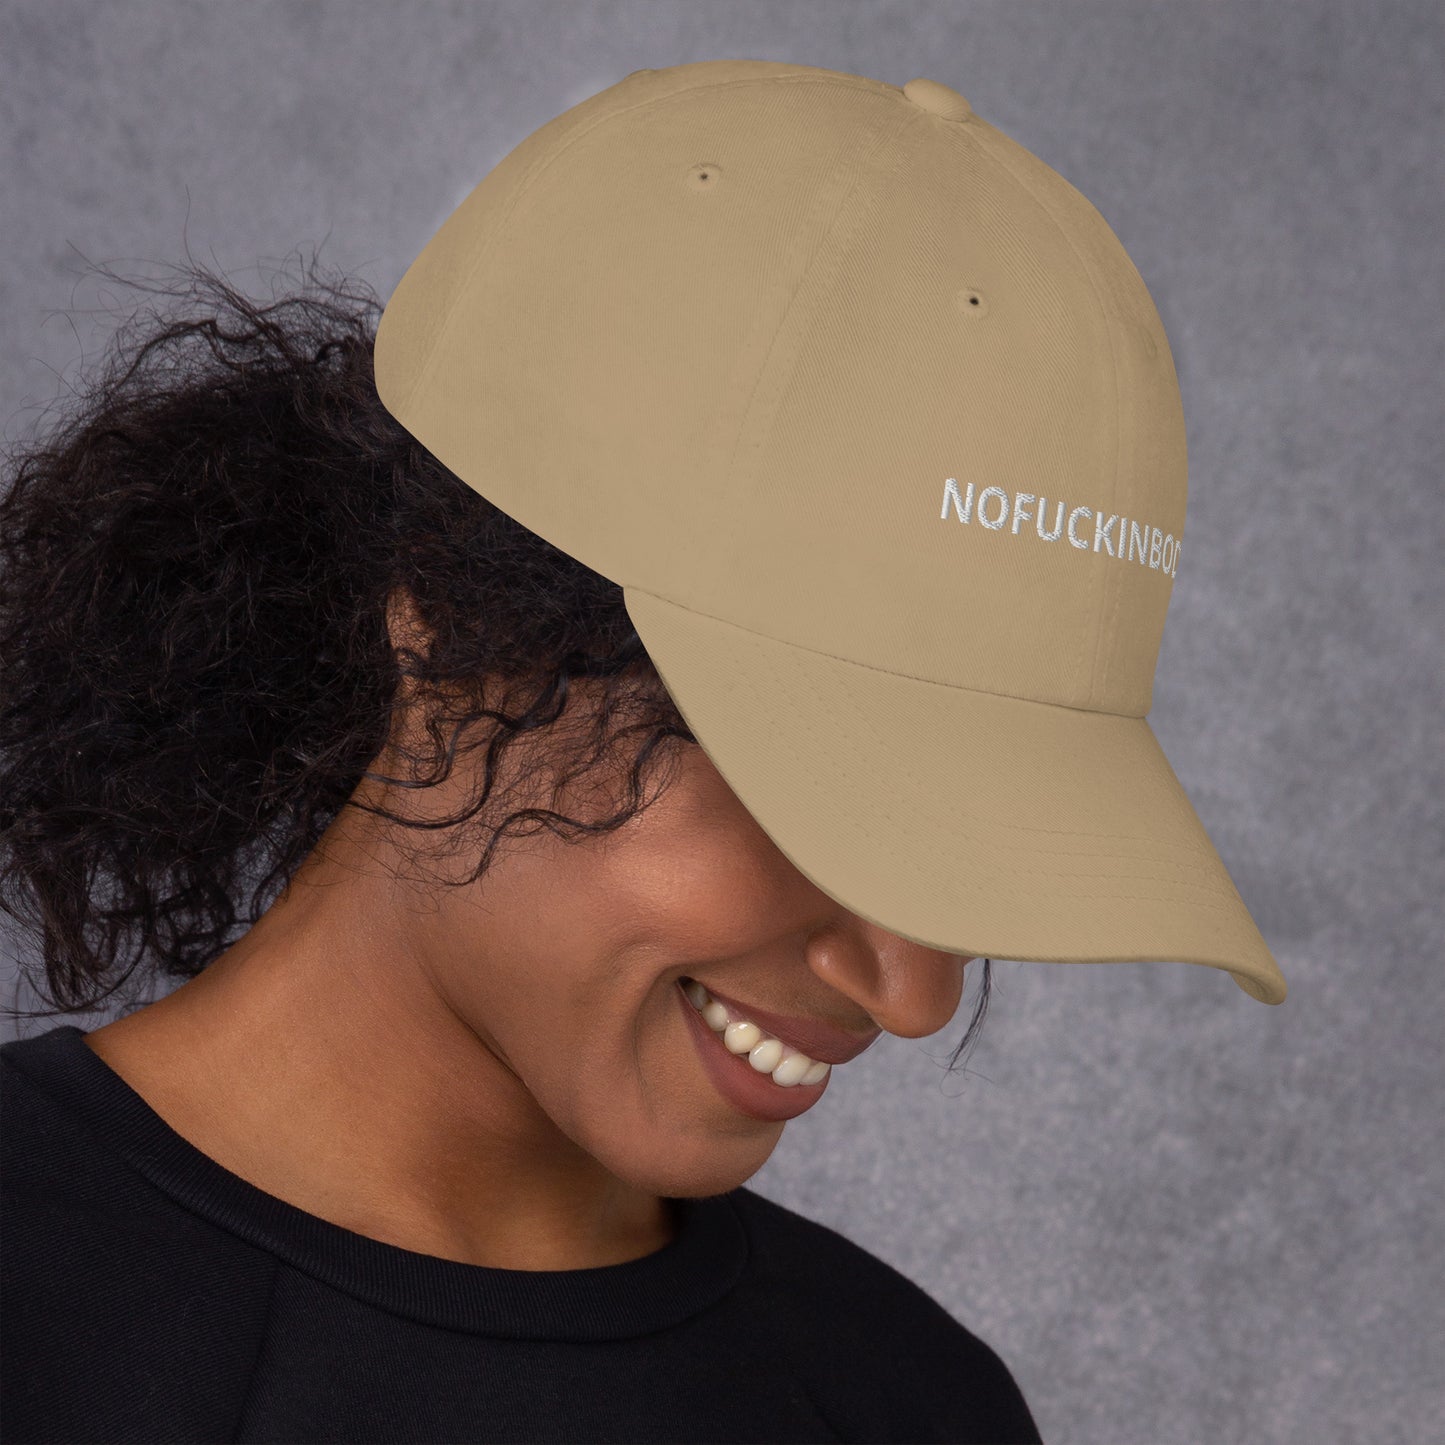 NOFUCKINBODY hat